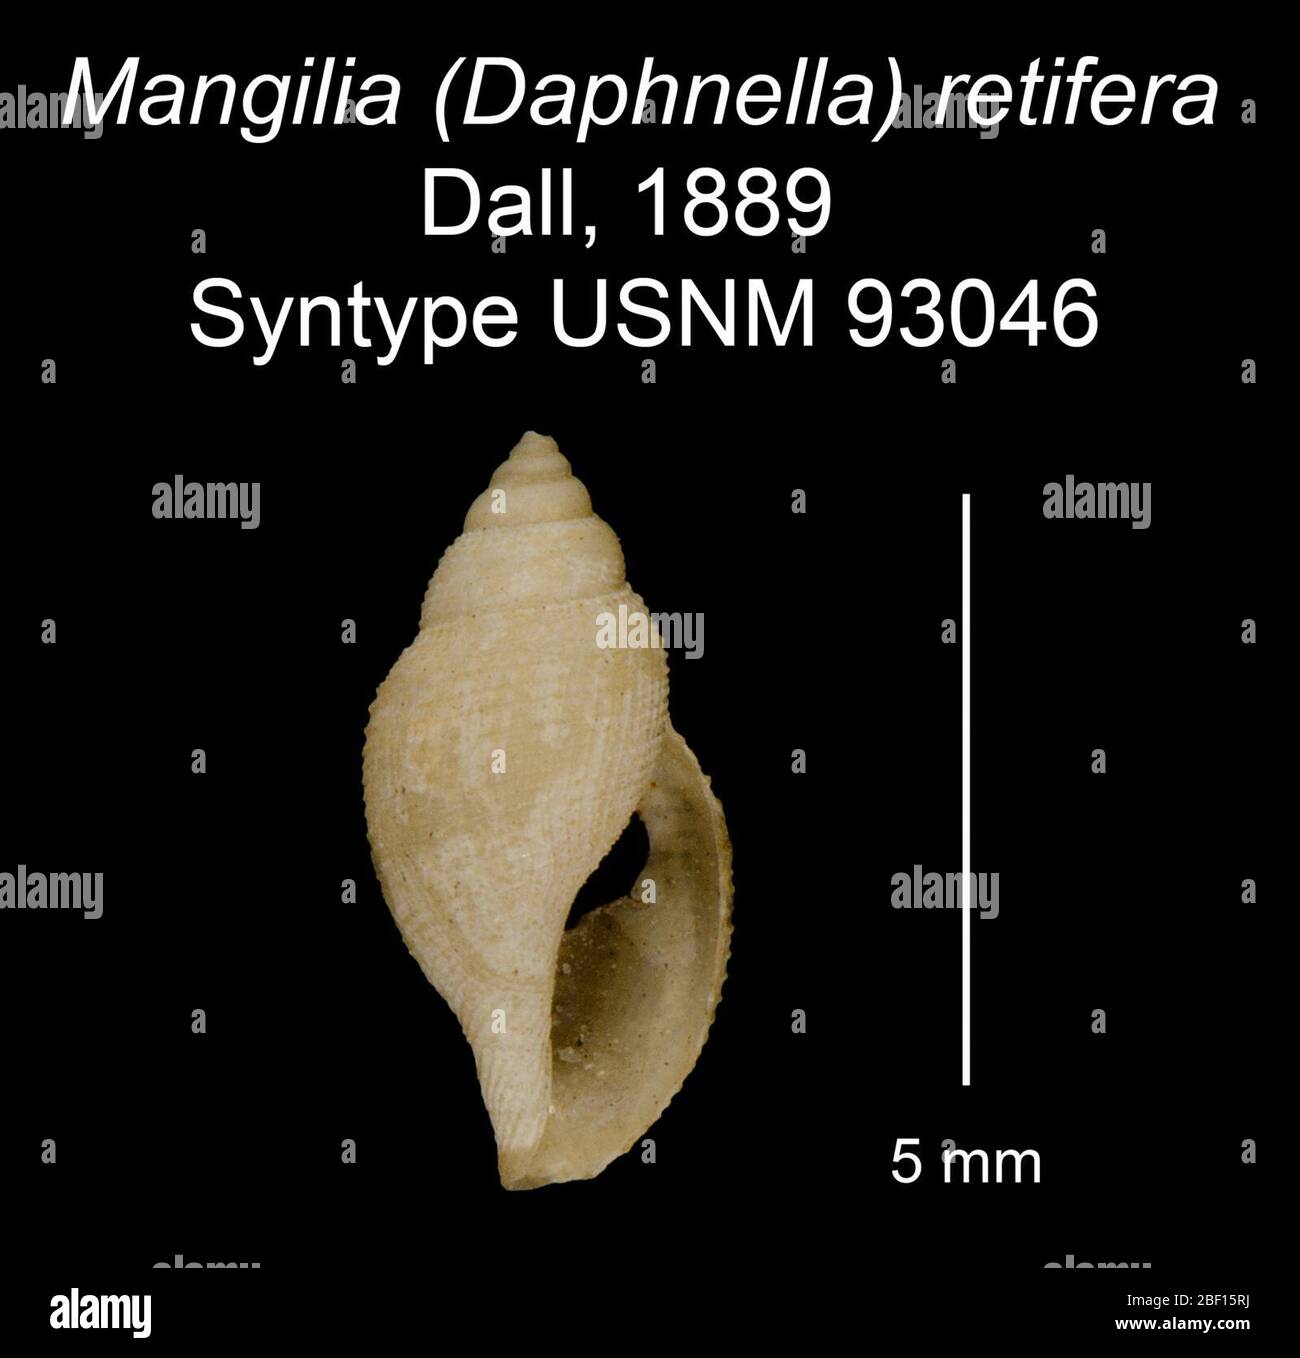 Mangilia Daphnella retifera. 20 Jan 201625961 Stock Photo